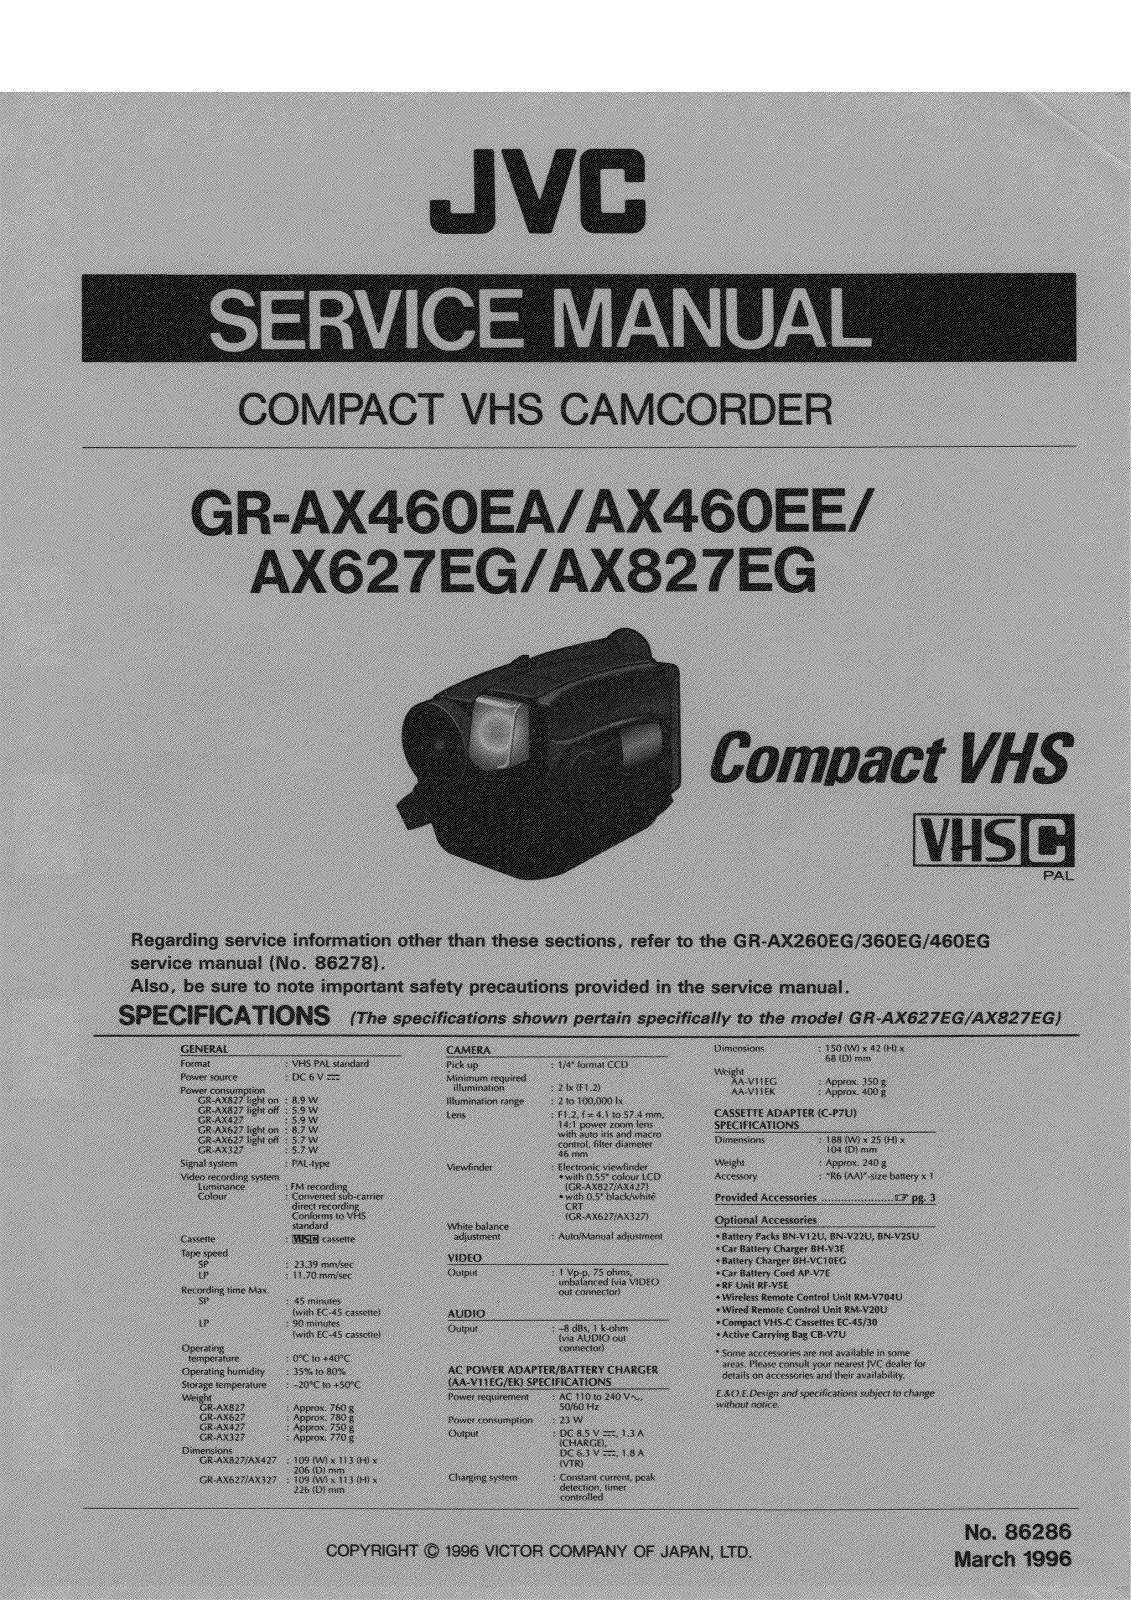 JVC GR-AX460EA, GR-AX460EE, GR-AX627EG, GR-AX827EG Service Manual